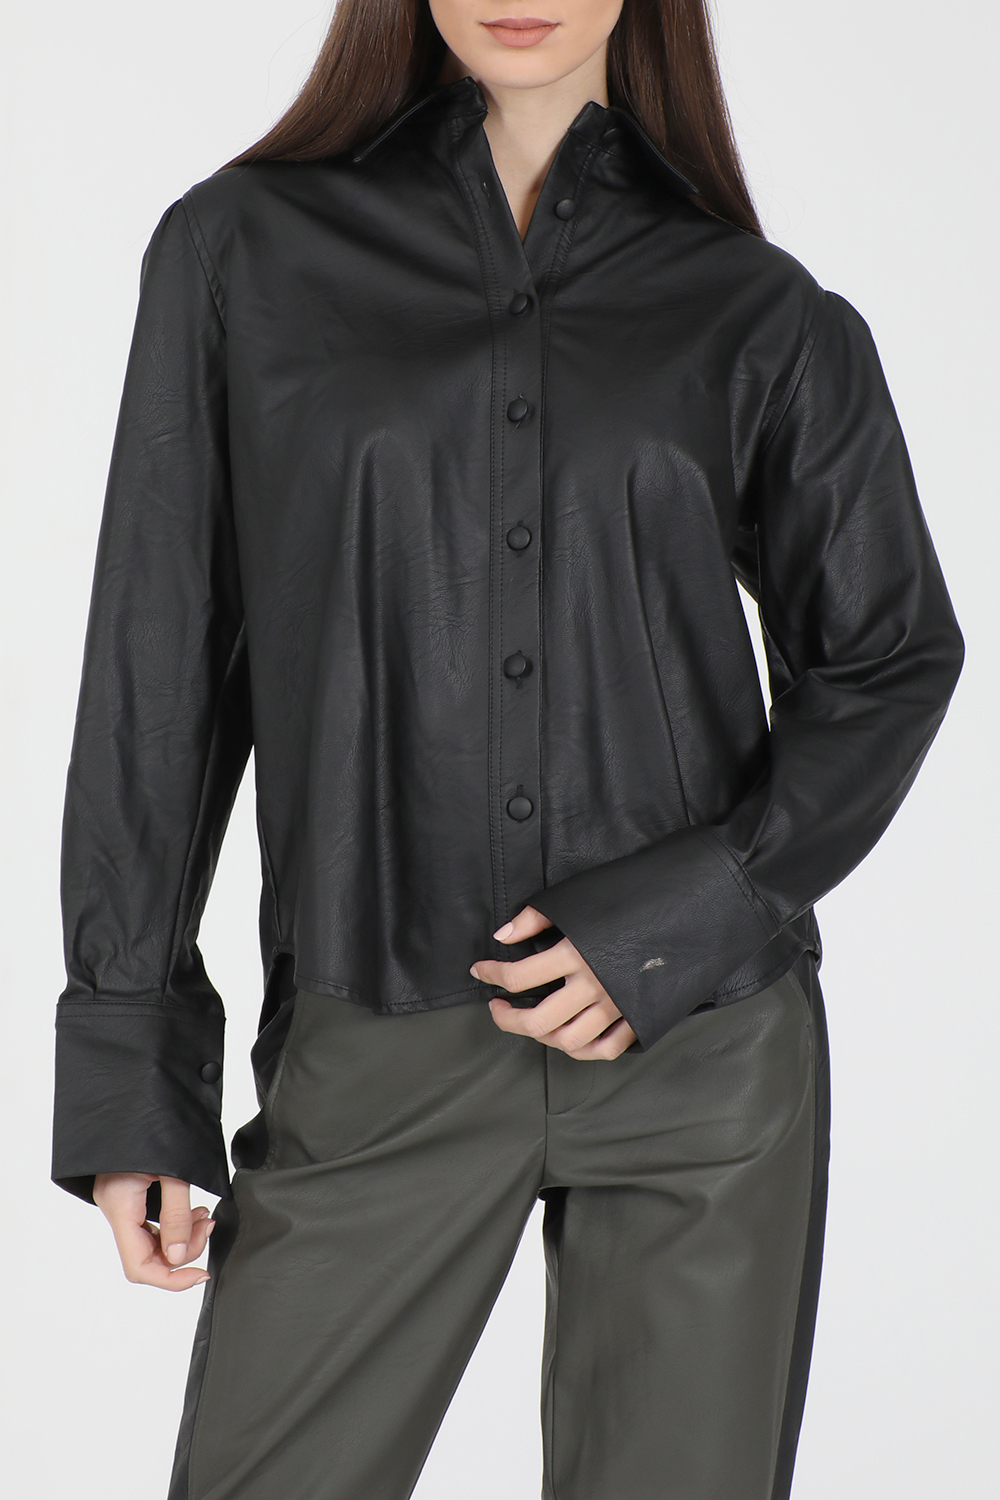 LA DOLLS – Γυναικείο πουκάμισο LA DOLLS MORGA μαύρο 1820901.0-0071